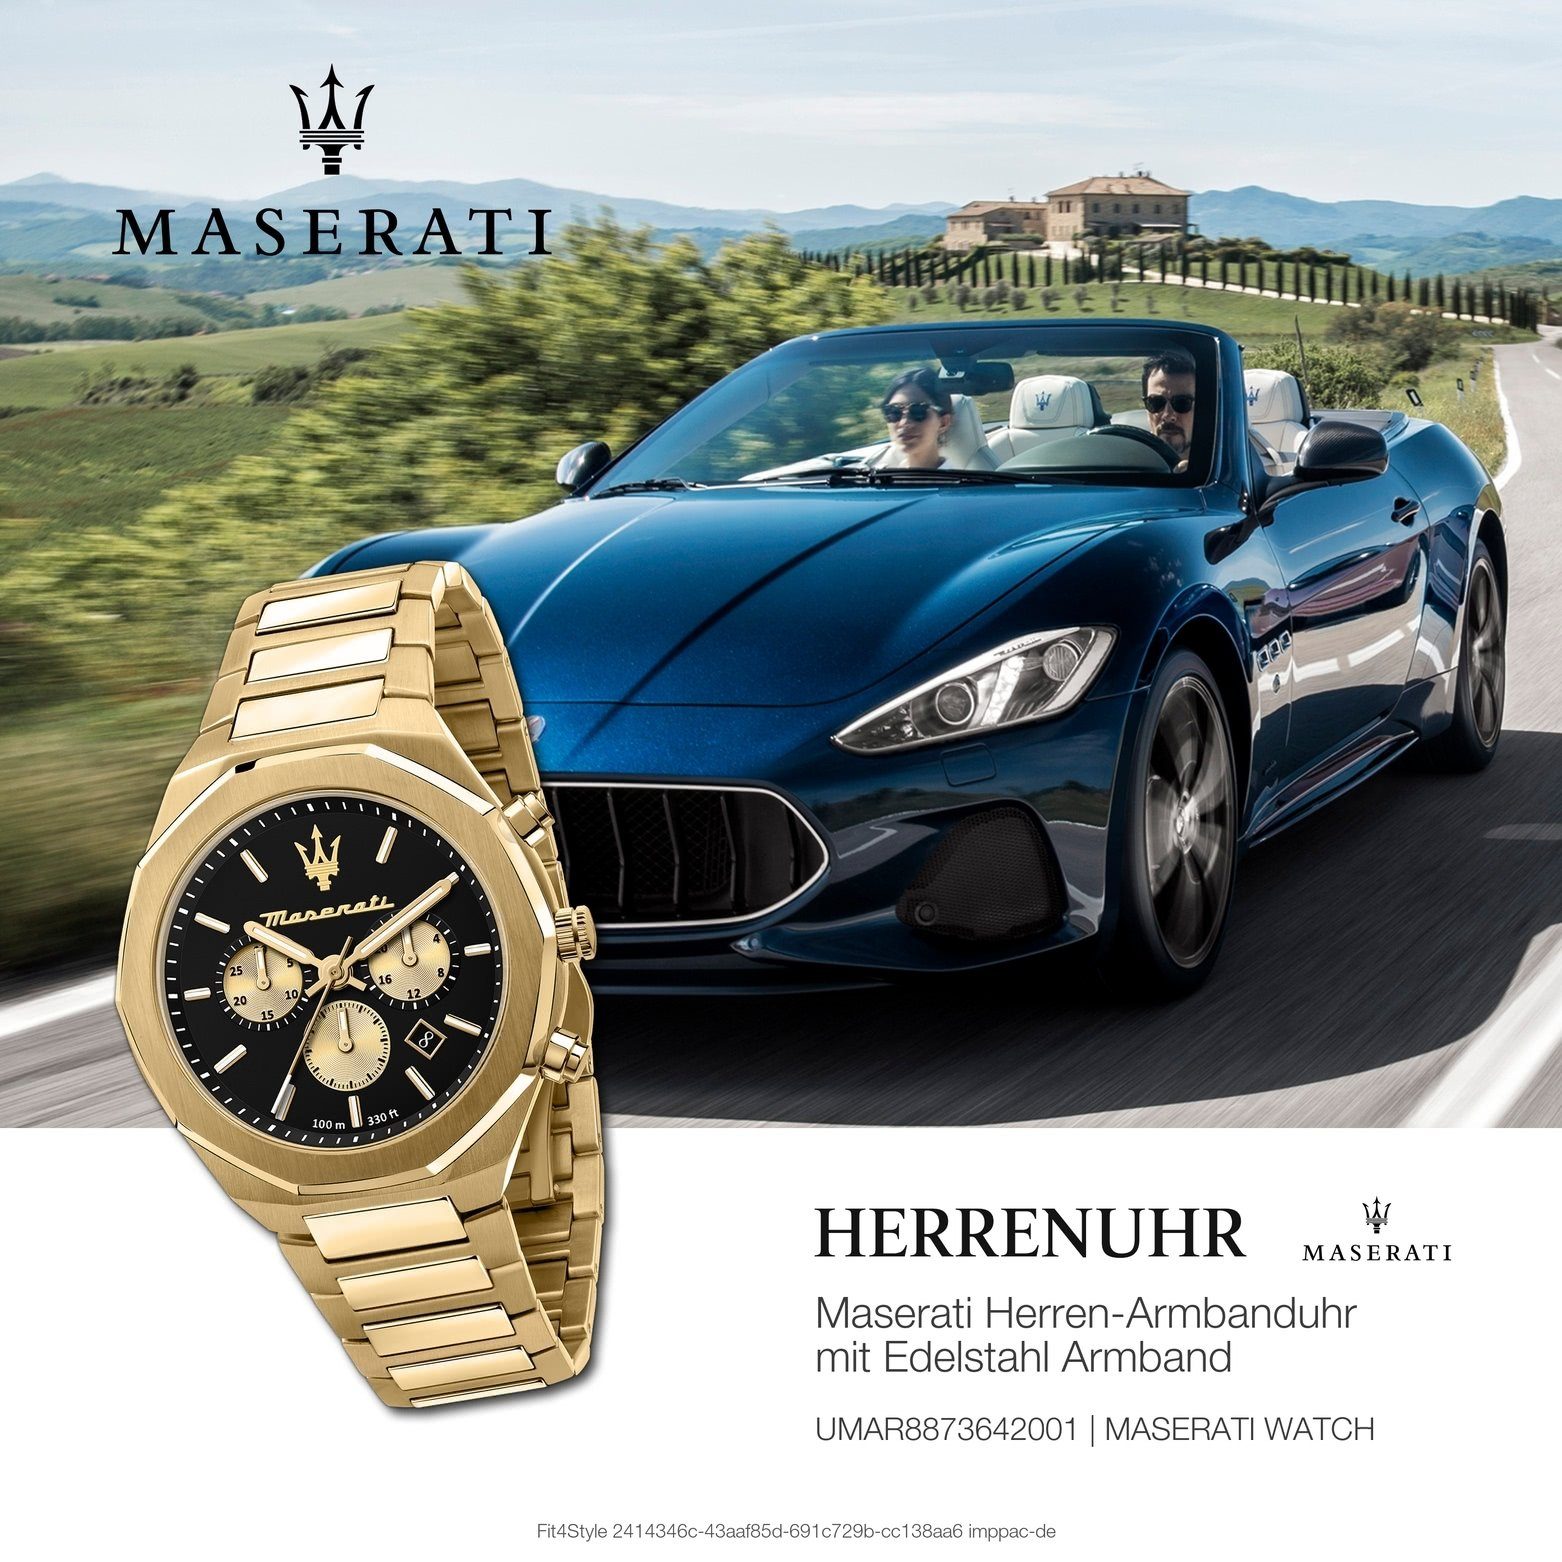 MASERATI Chronograph Maserati (ca. Herren Made-In rund, Italy Chronograph, gold groß 45mm) Uhr Edelstahlarmband, Herrenuhr